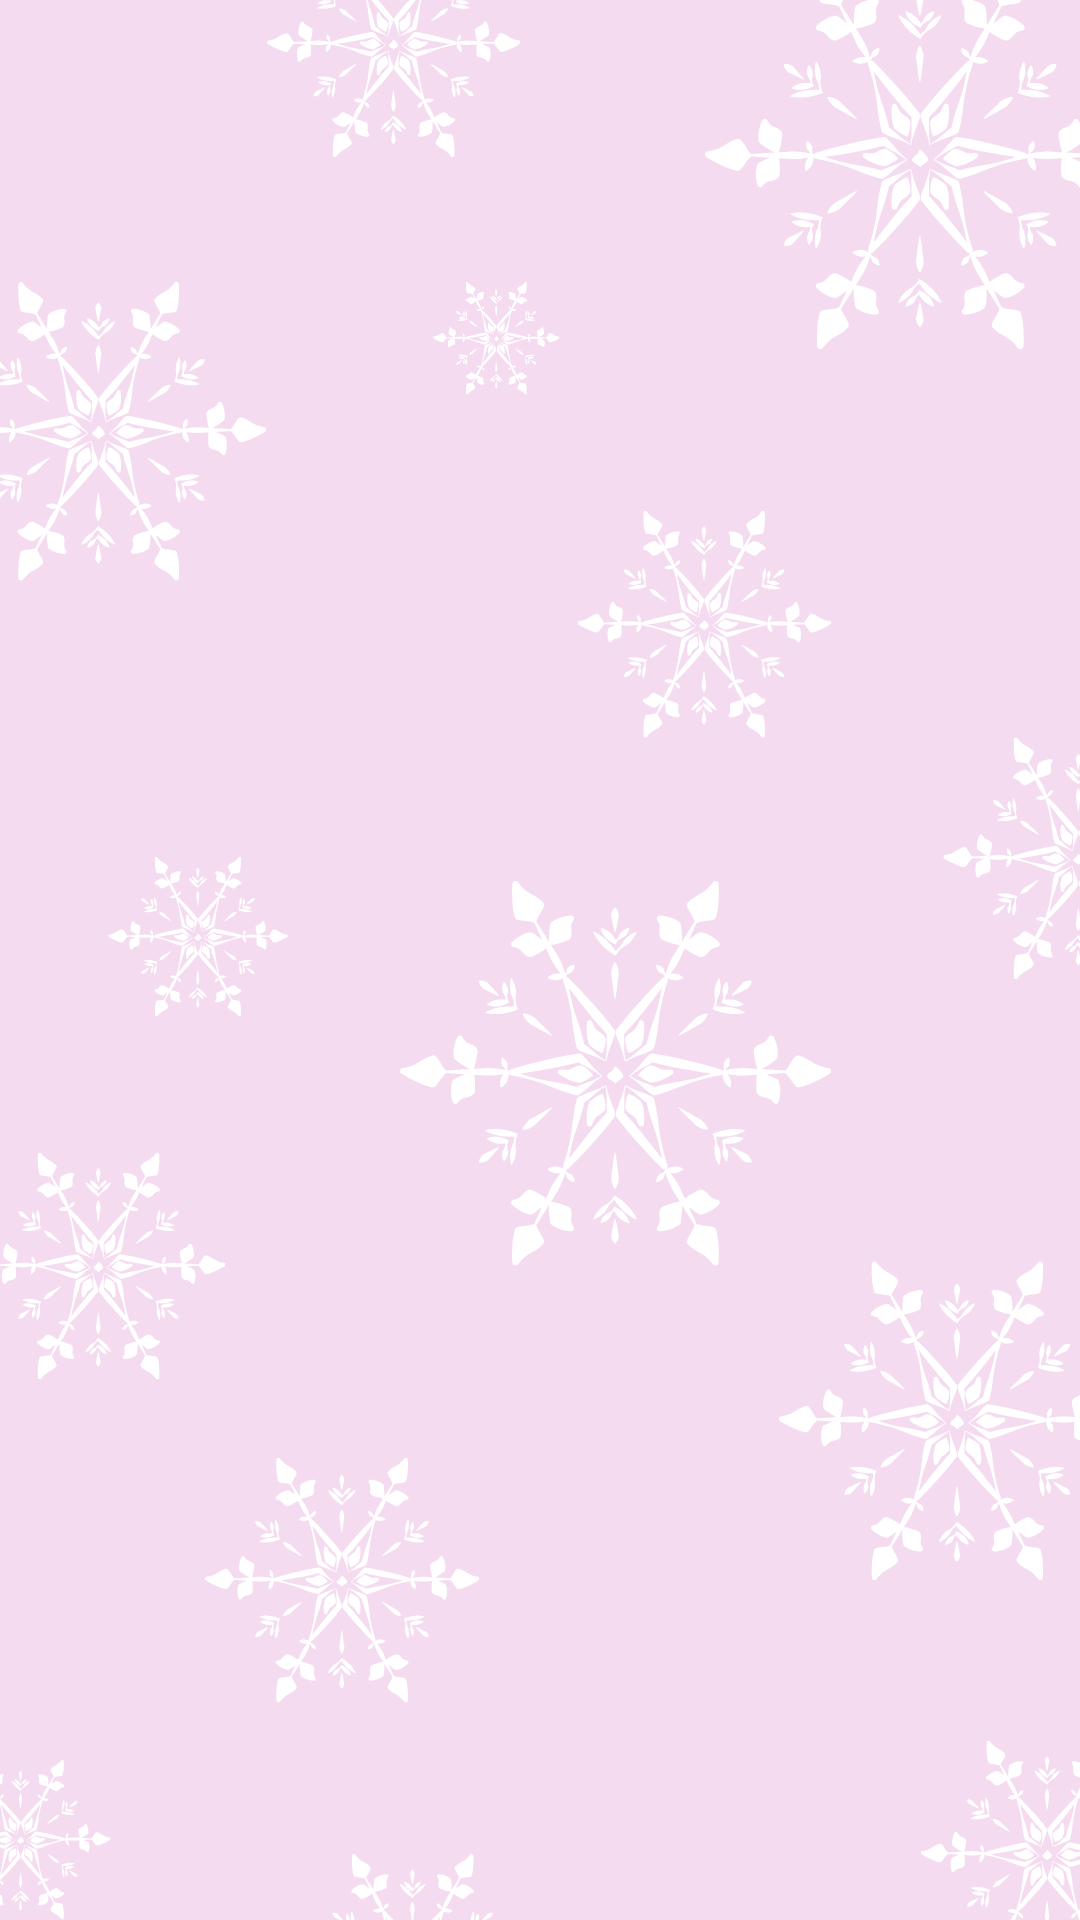 Pink background with white snowflakes - Snowflake